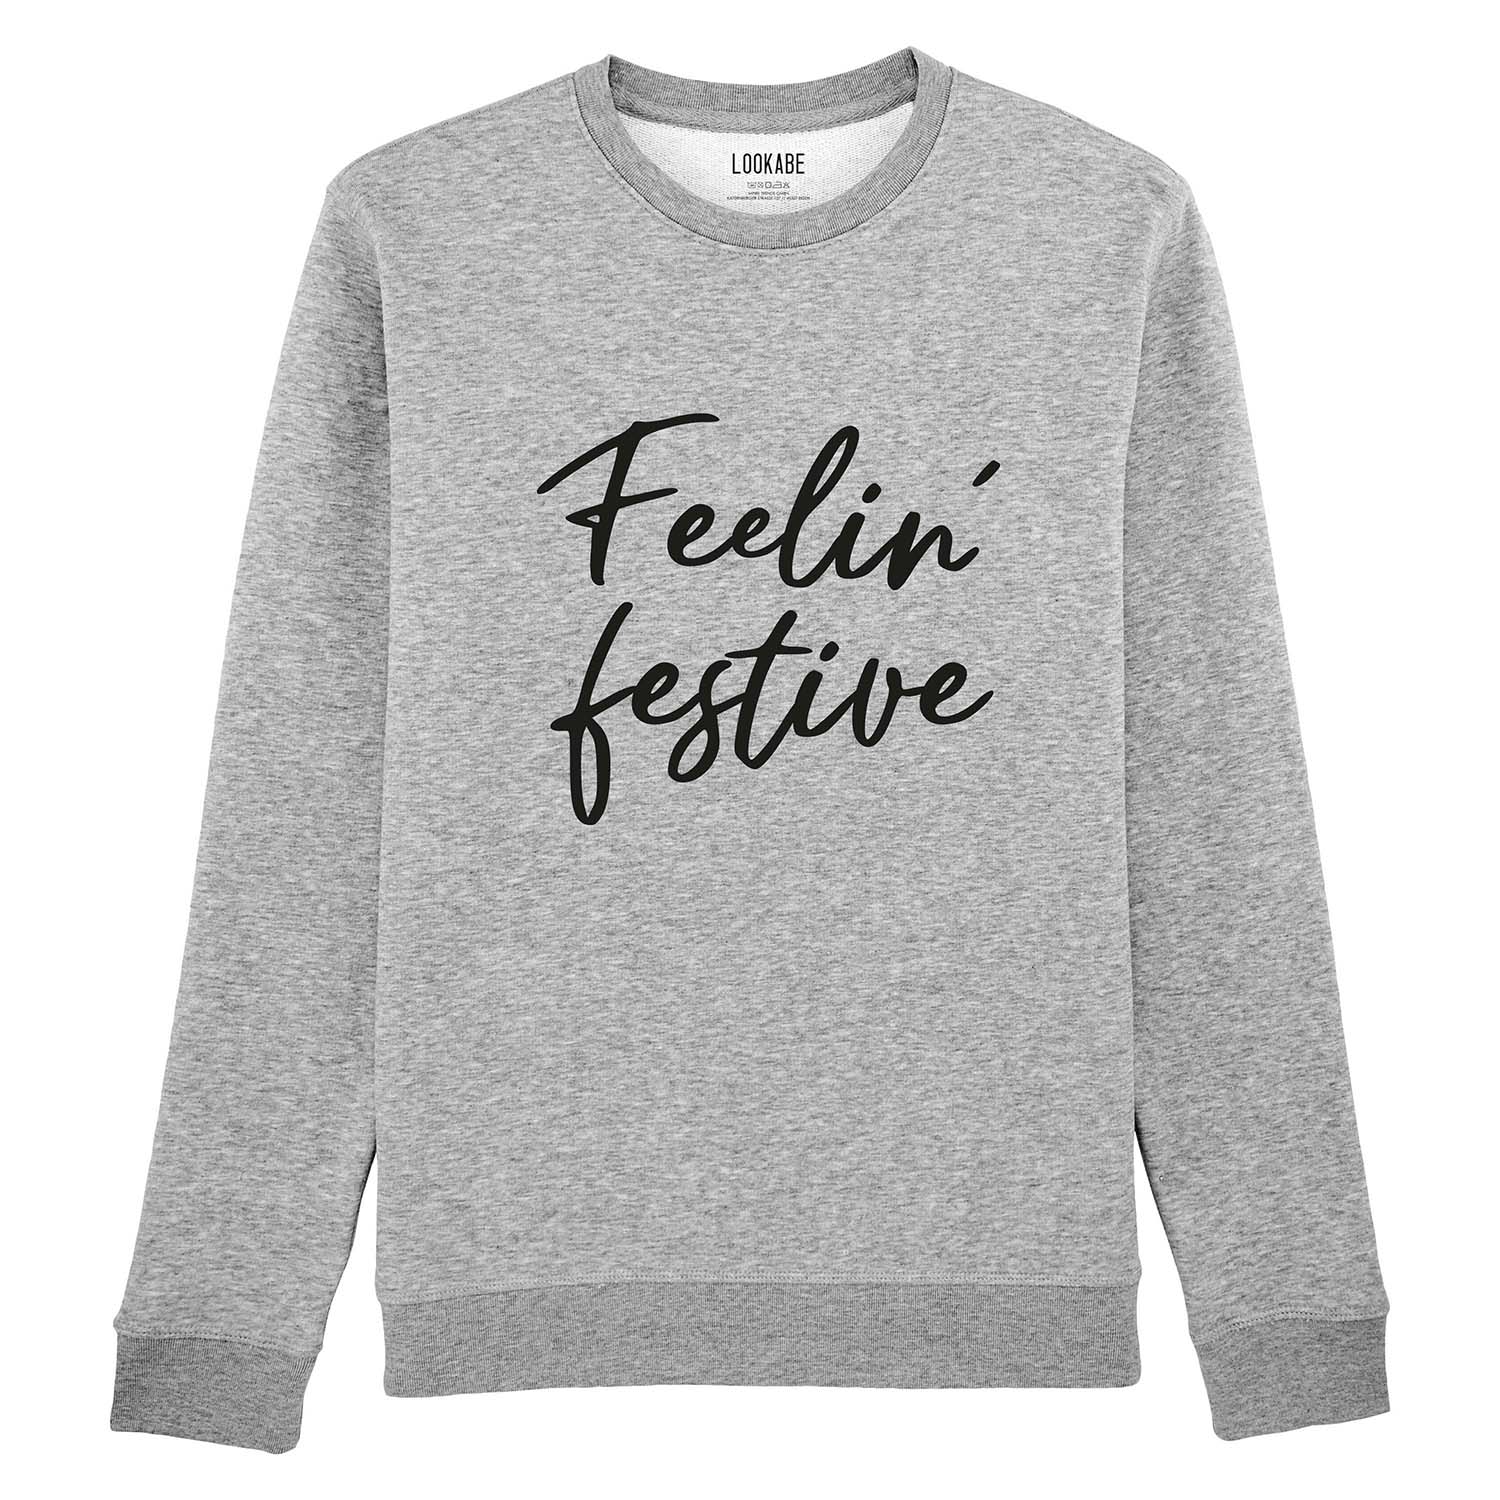 XMAS Sweatshirt - Feelin' festive